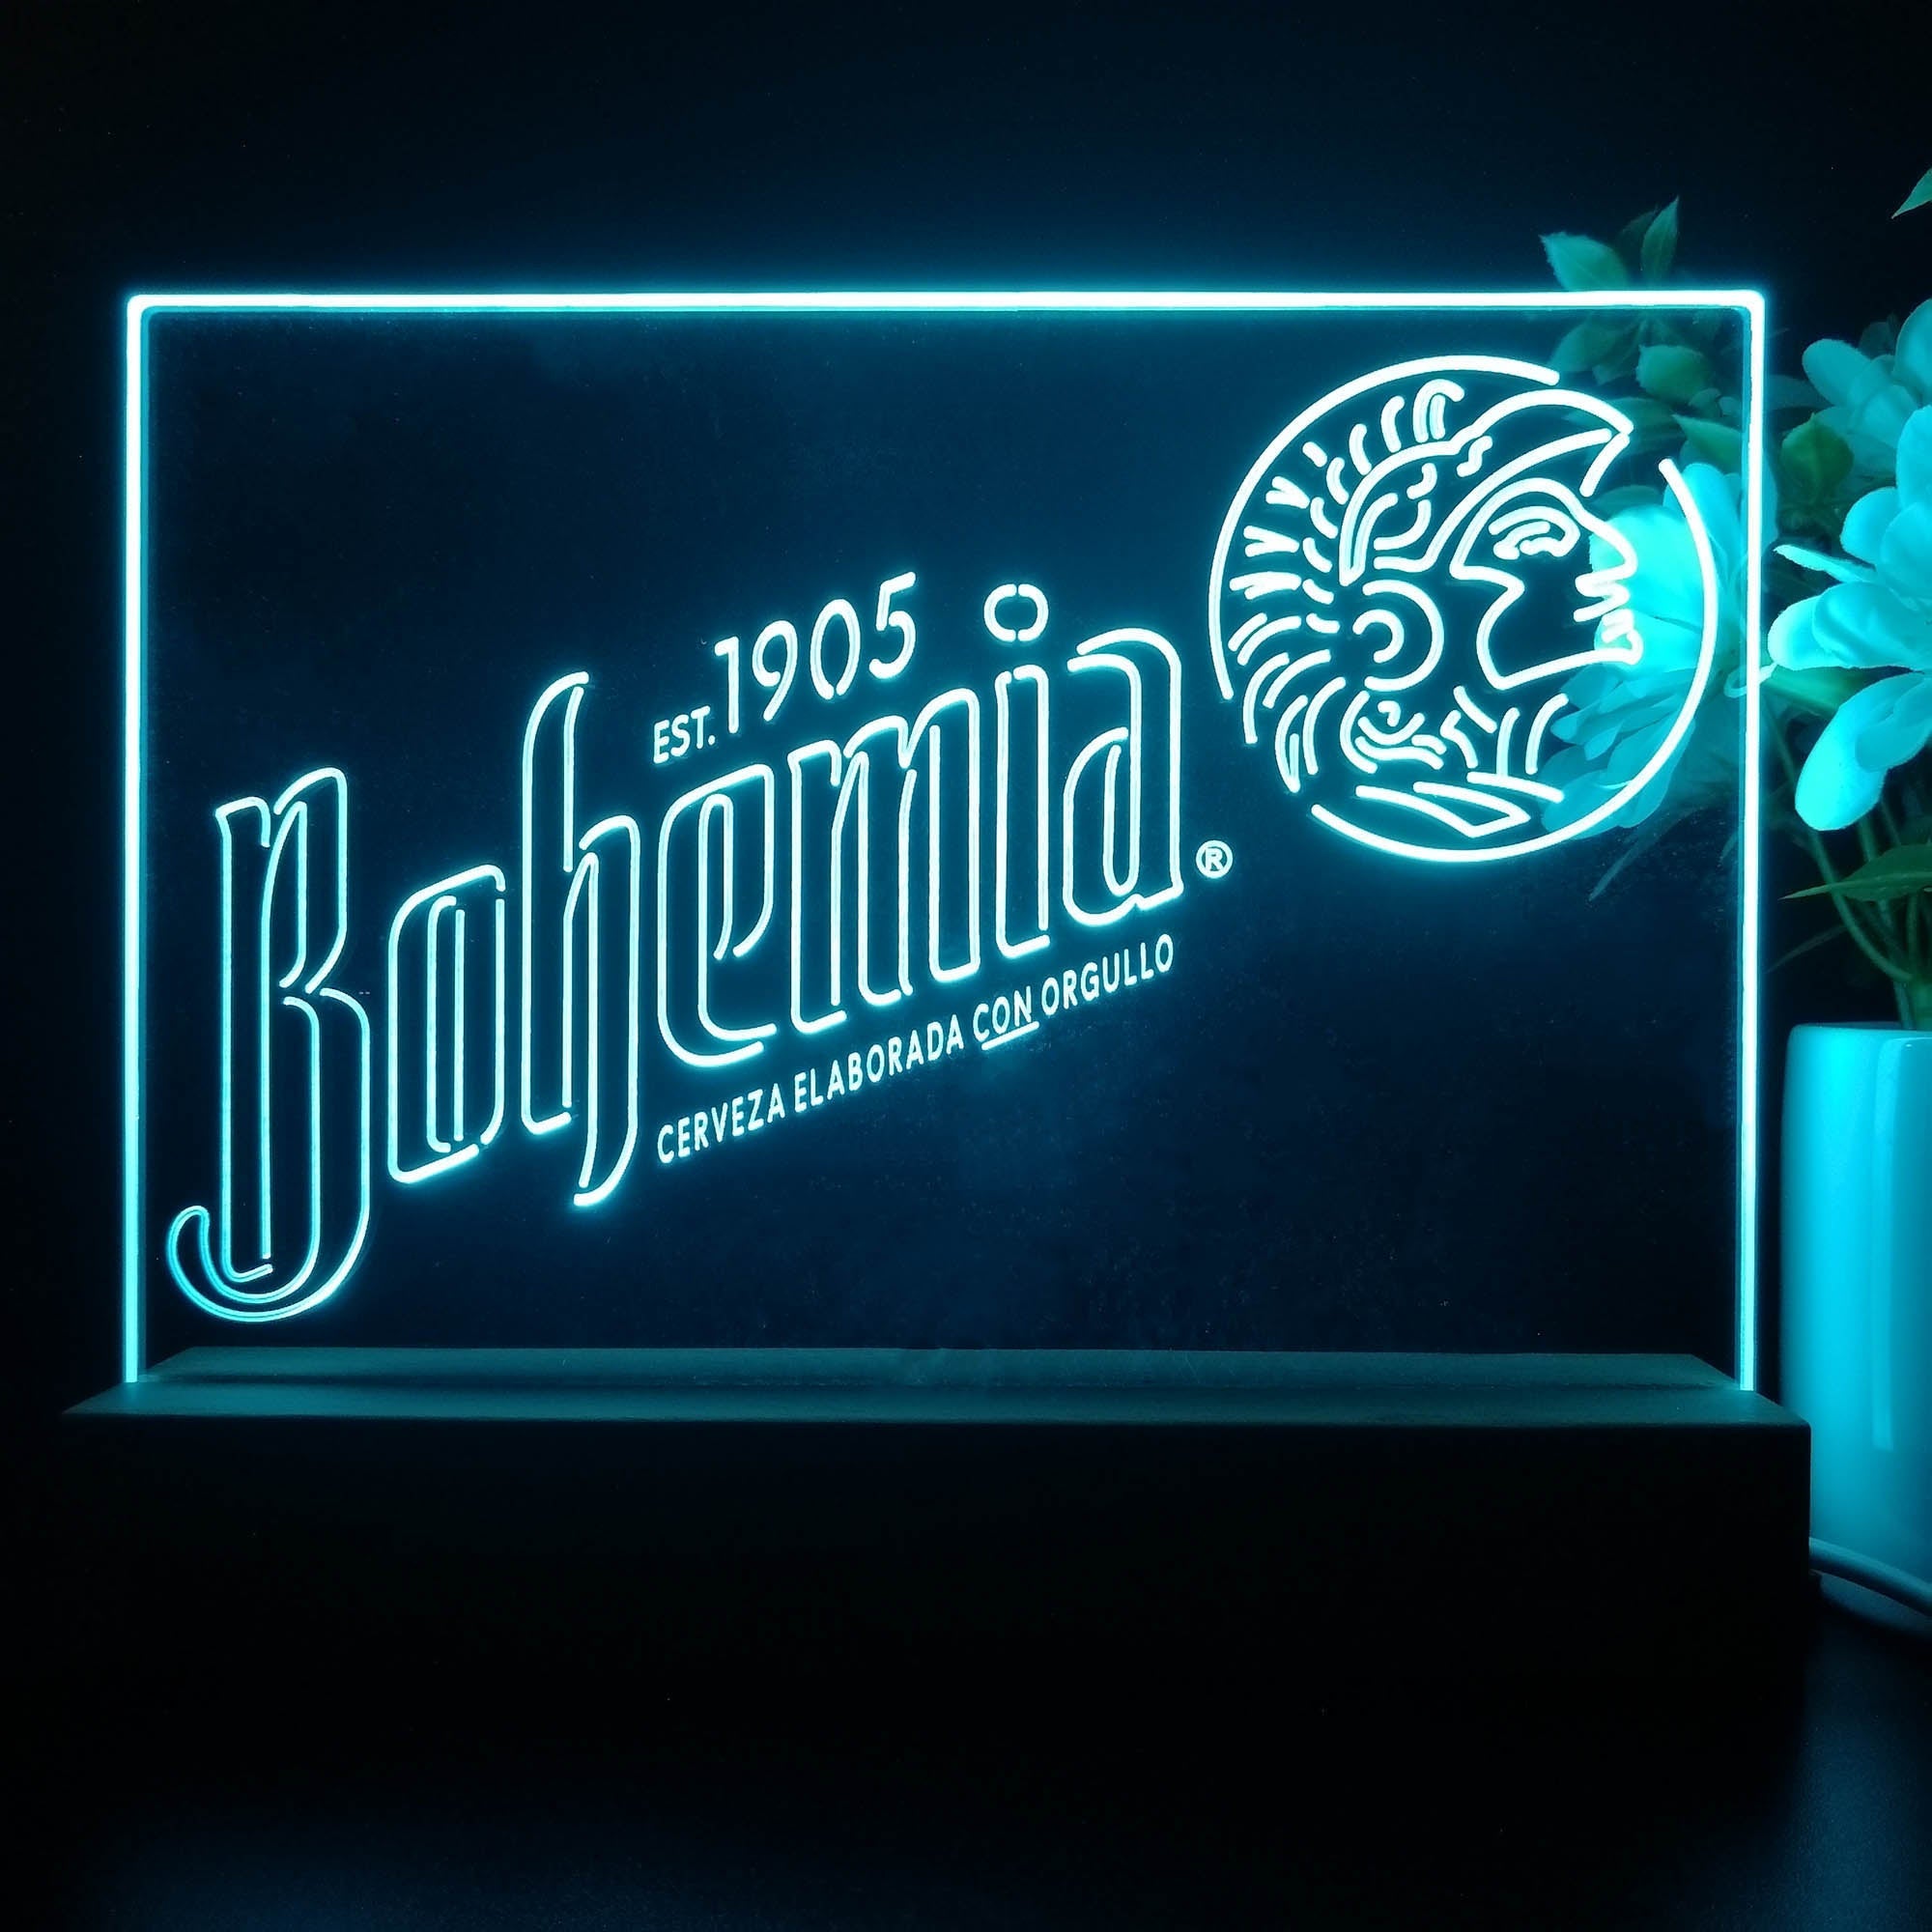 Cervejaria Bohemia Neon Sign Pub Bar Lamp